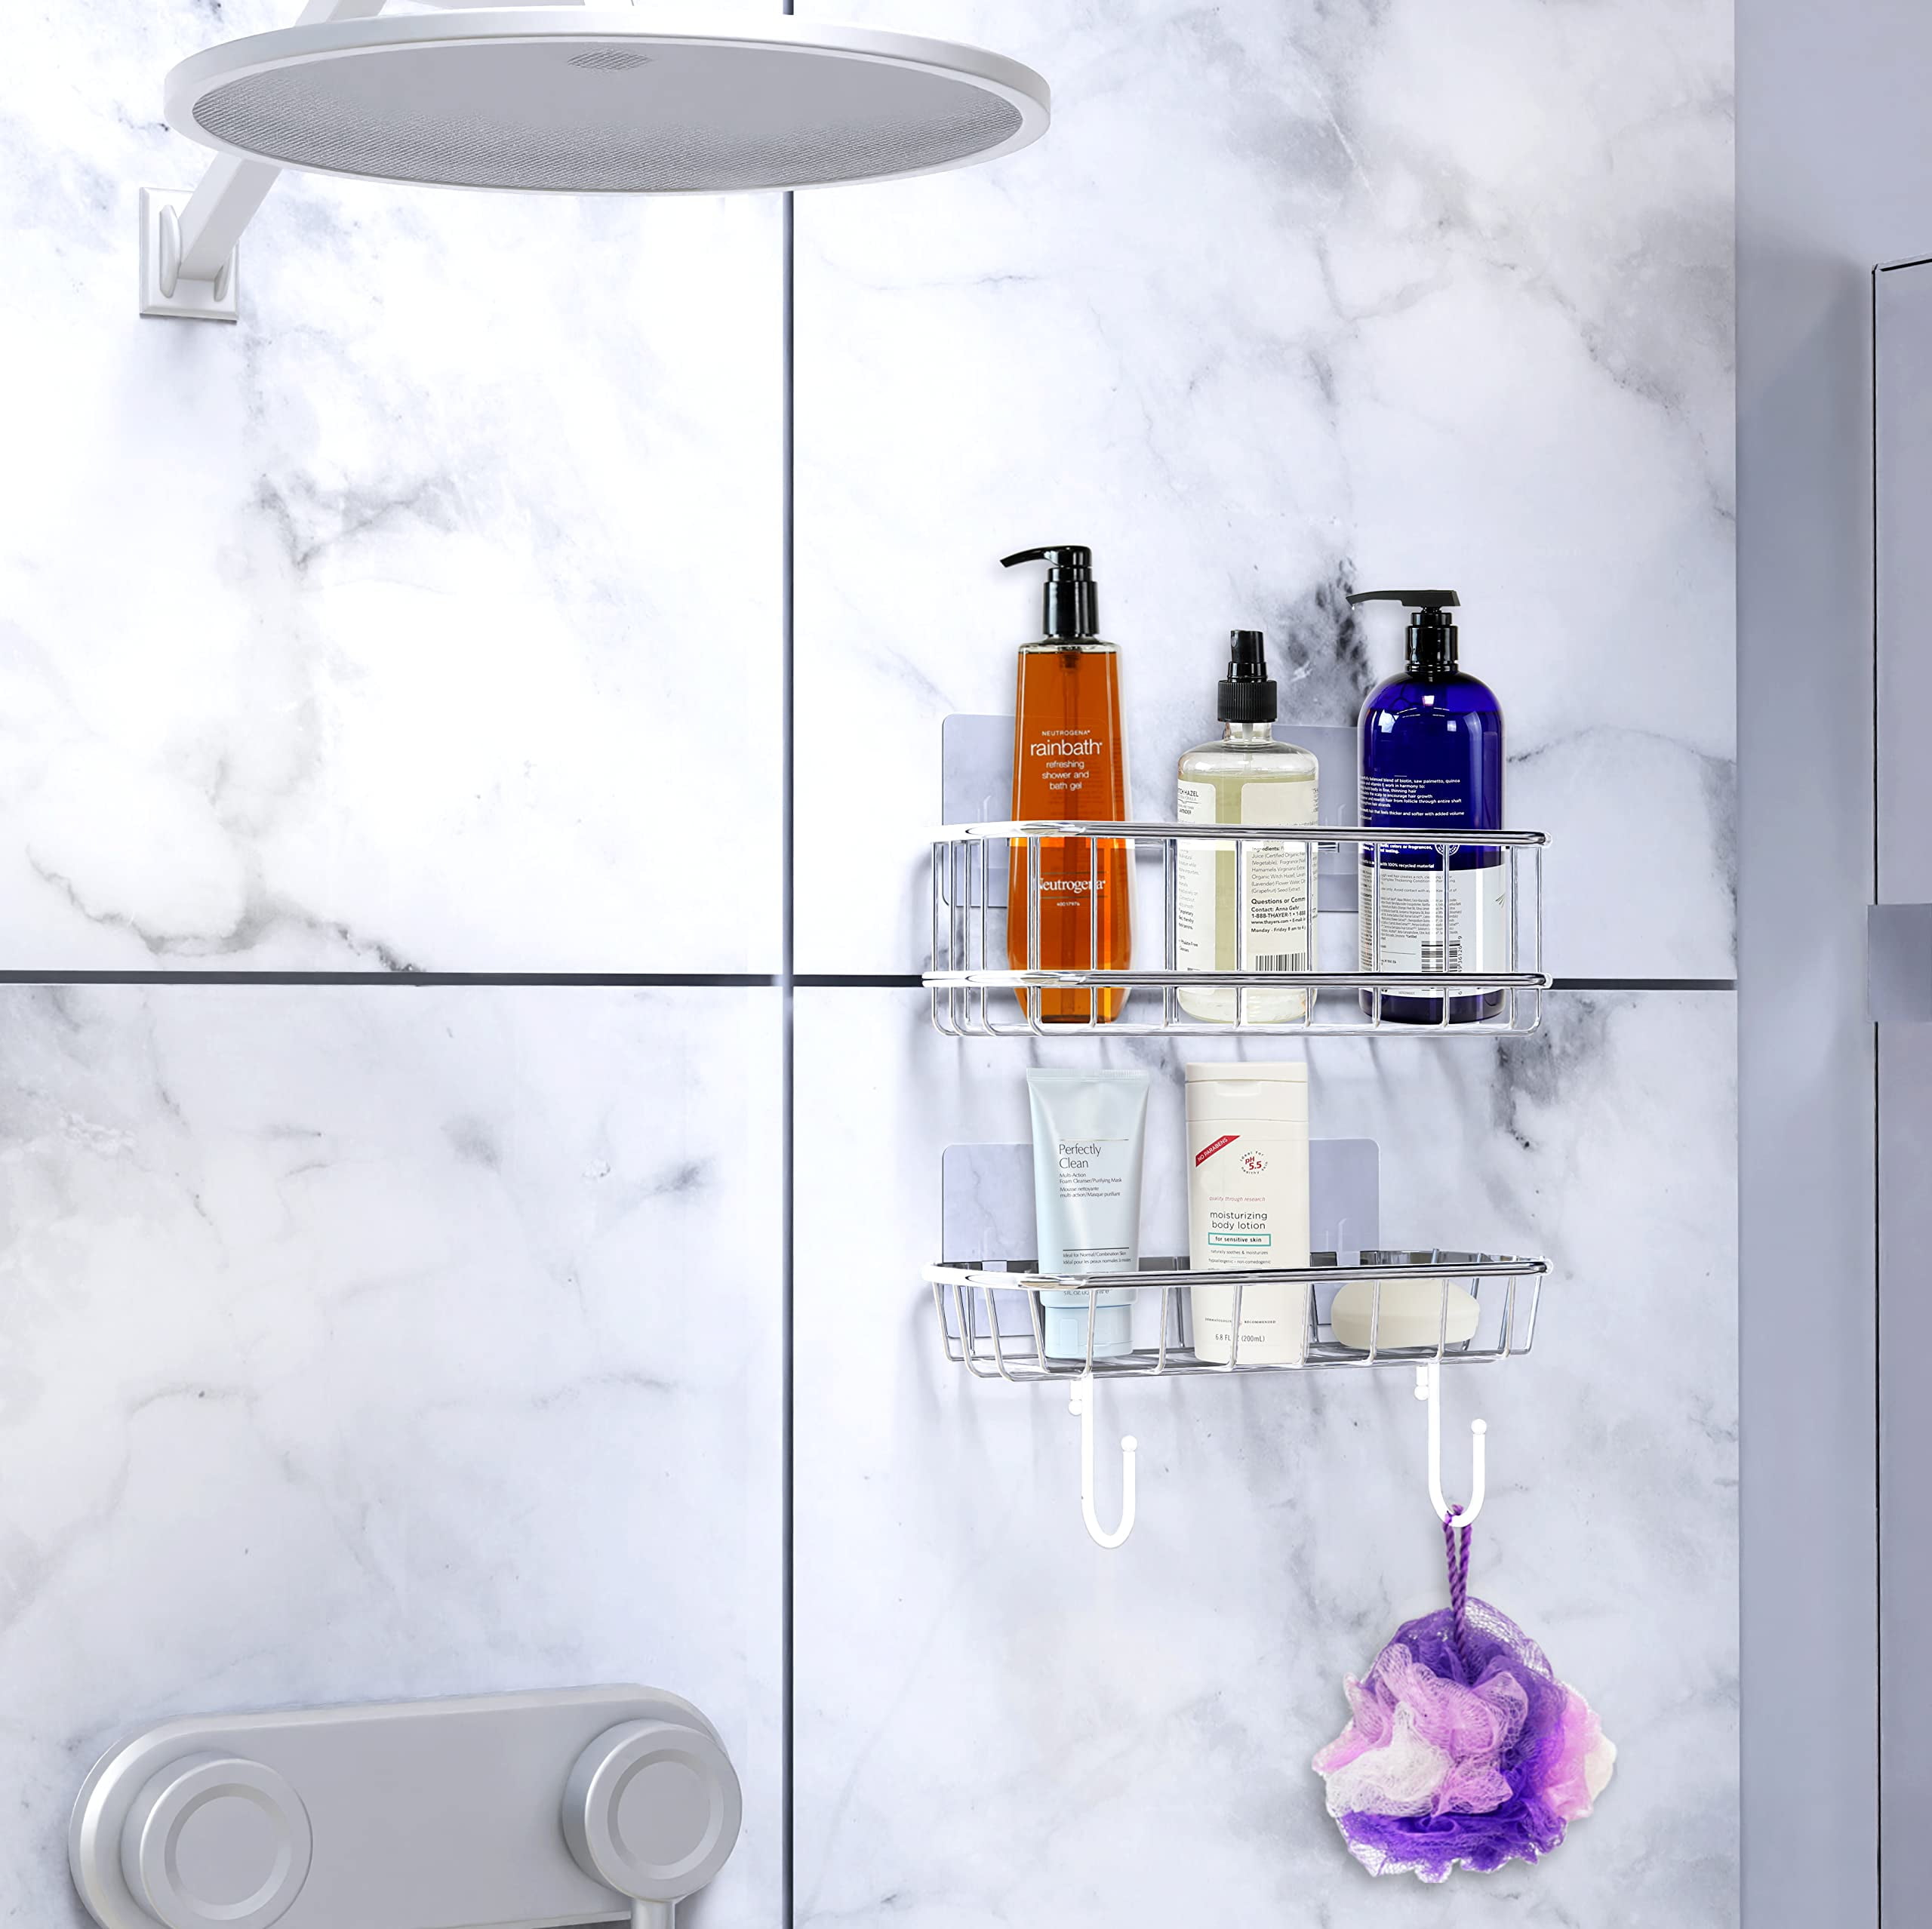 RelaxScene Shower Caddy Shelf - Self Adhesive 2-Pack Bathroom